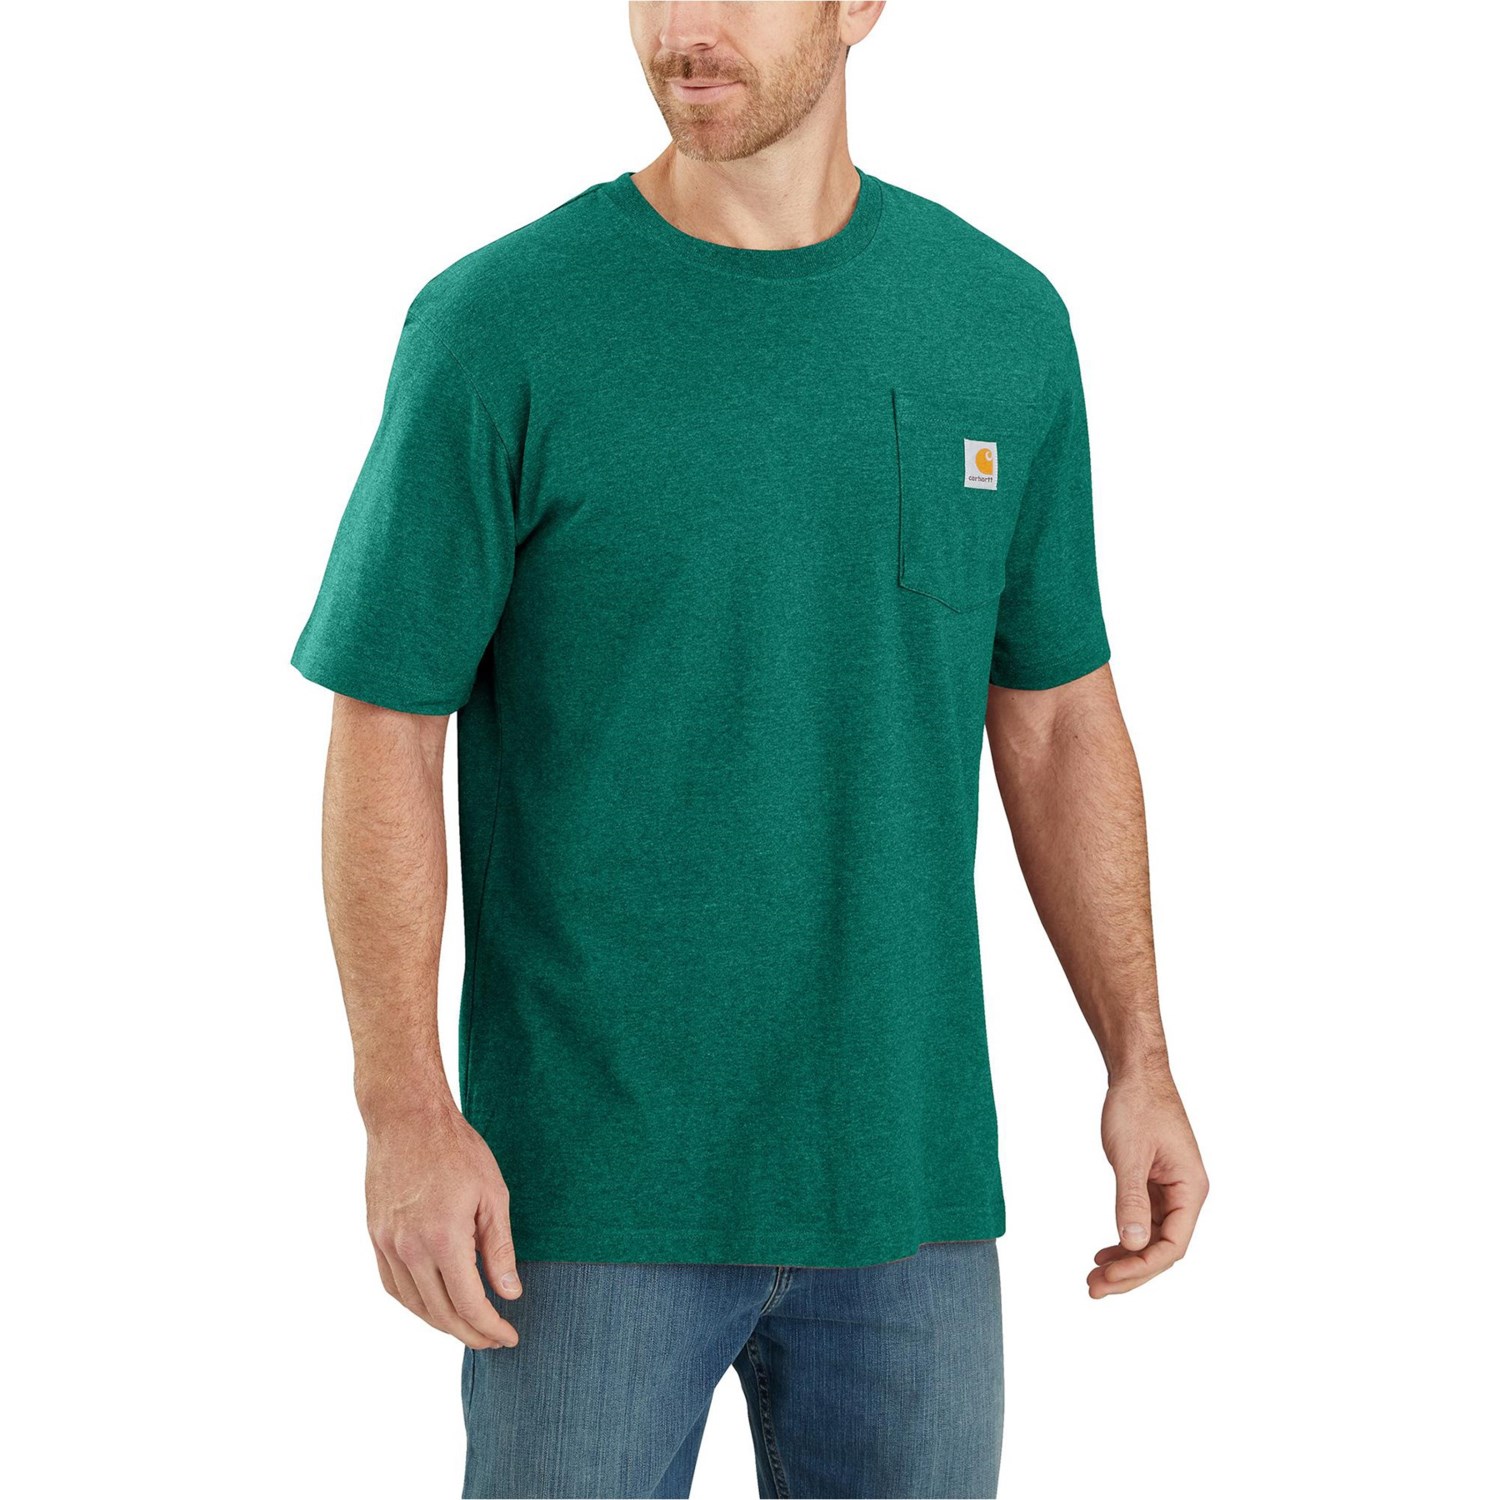 Carhartt K87 Loose Fit Heavyweight Pocket T-Shirt - Short Sleeve